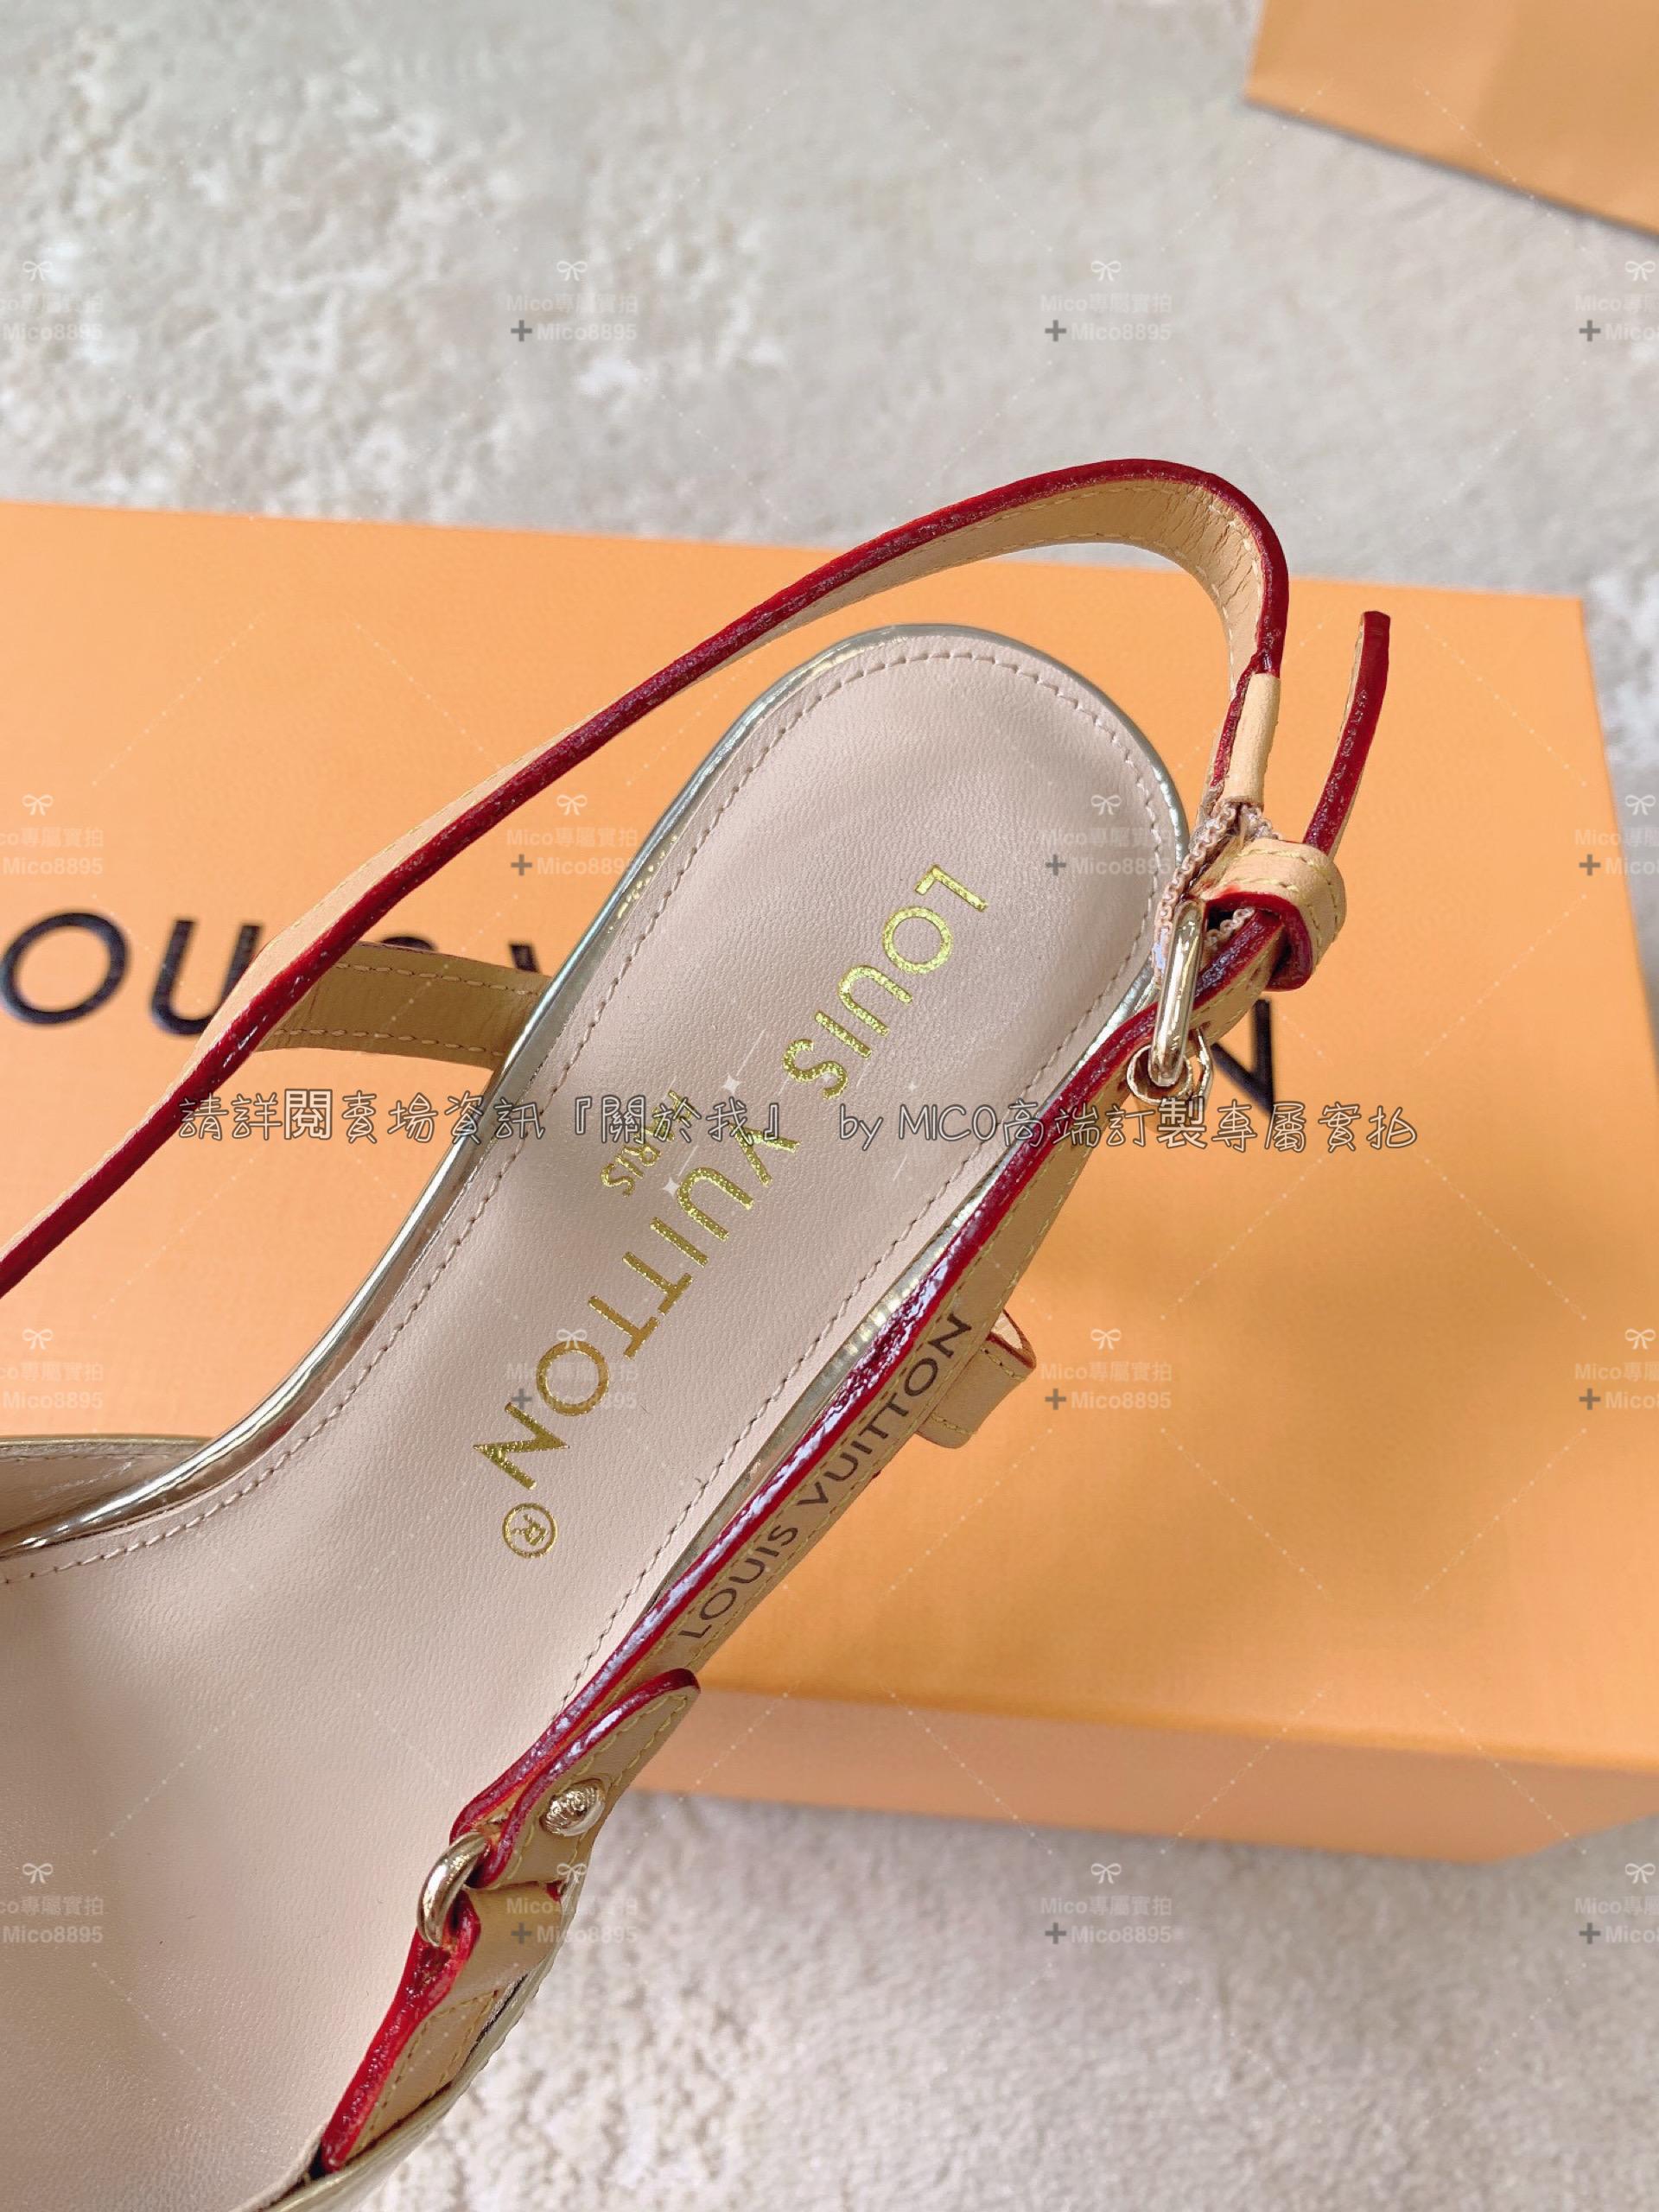 Louis Vuitton 23ss LV 金色 Blossom 高跟涼鞋/跟鞋 跟高7.5cm 34-40